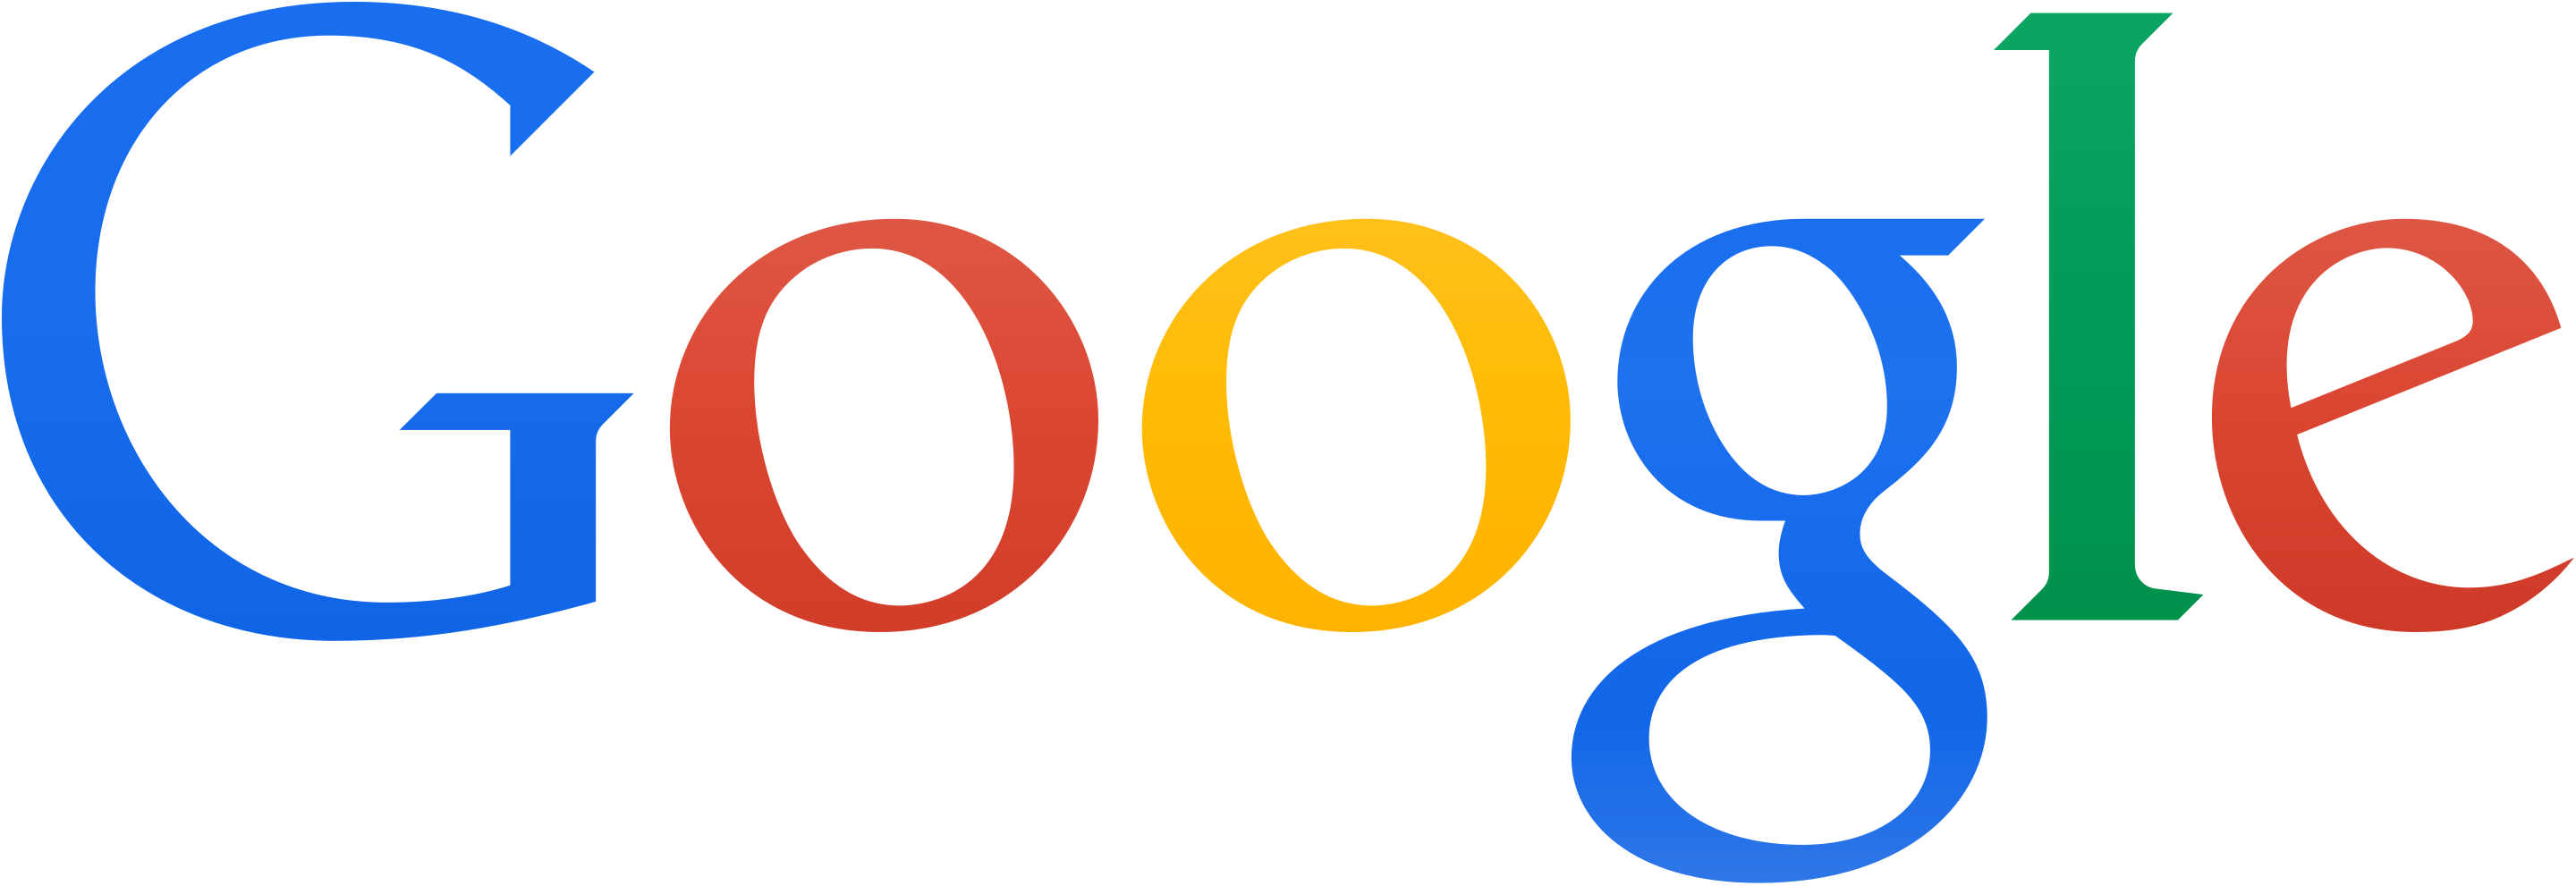 Google_logo_2013